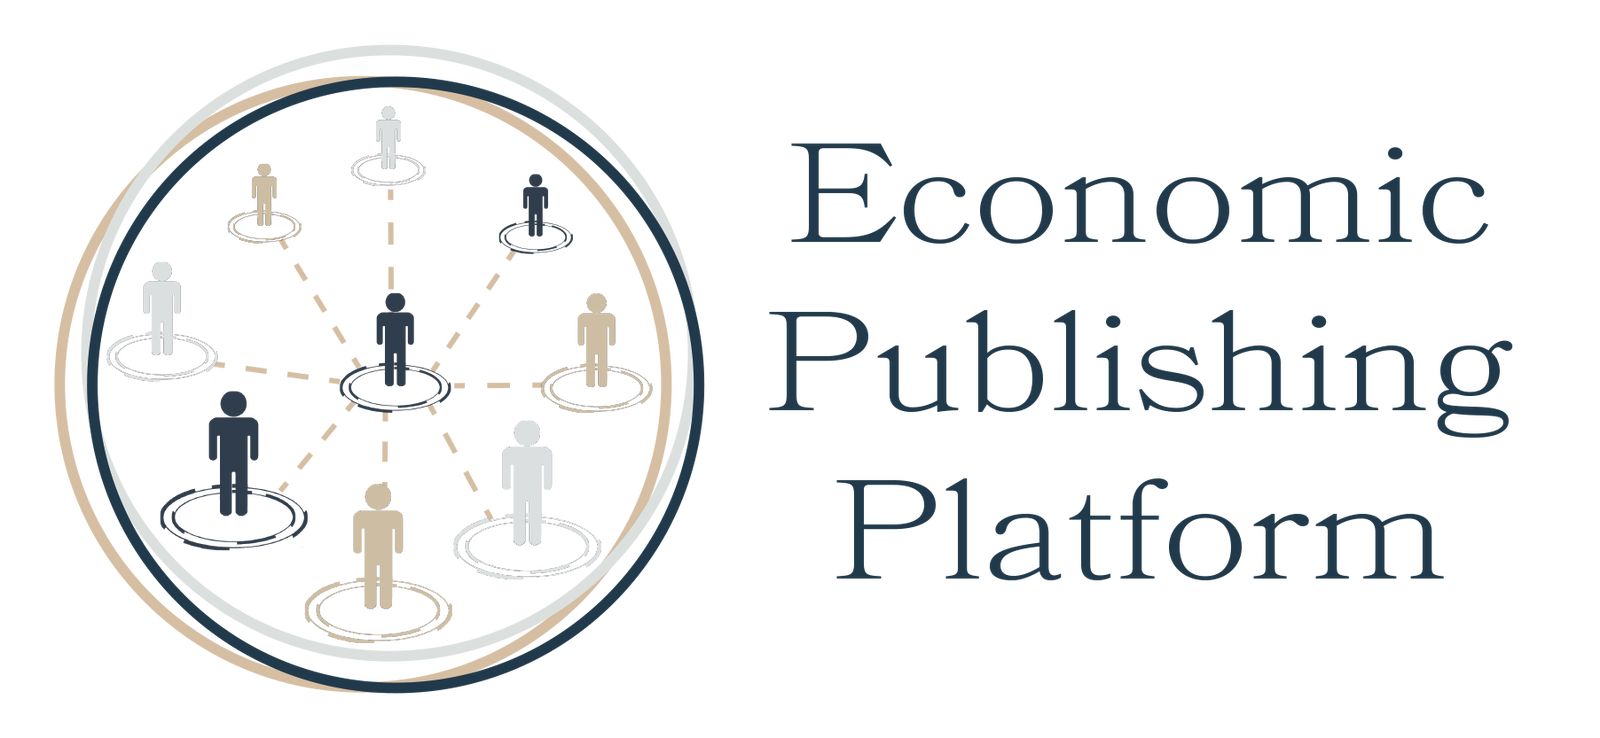 2_econoimc_publishing_platform-logo.png